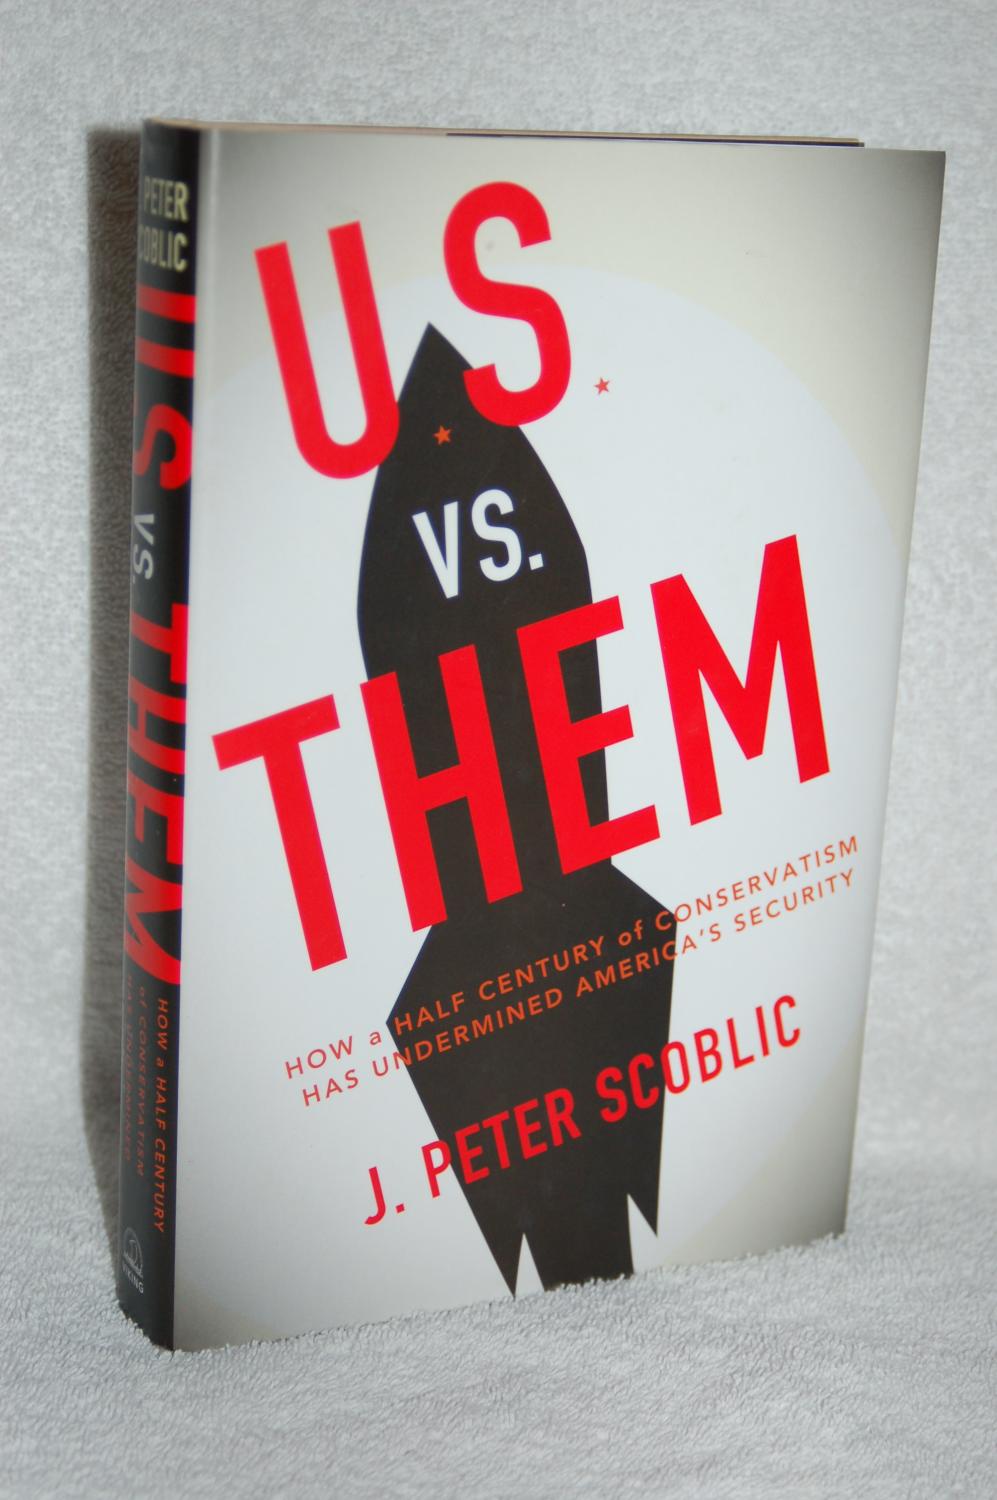 U.S. vs. Them; How a Half Century of Conservatism Has Undermined America's Security - J. Peter Scoblic